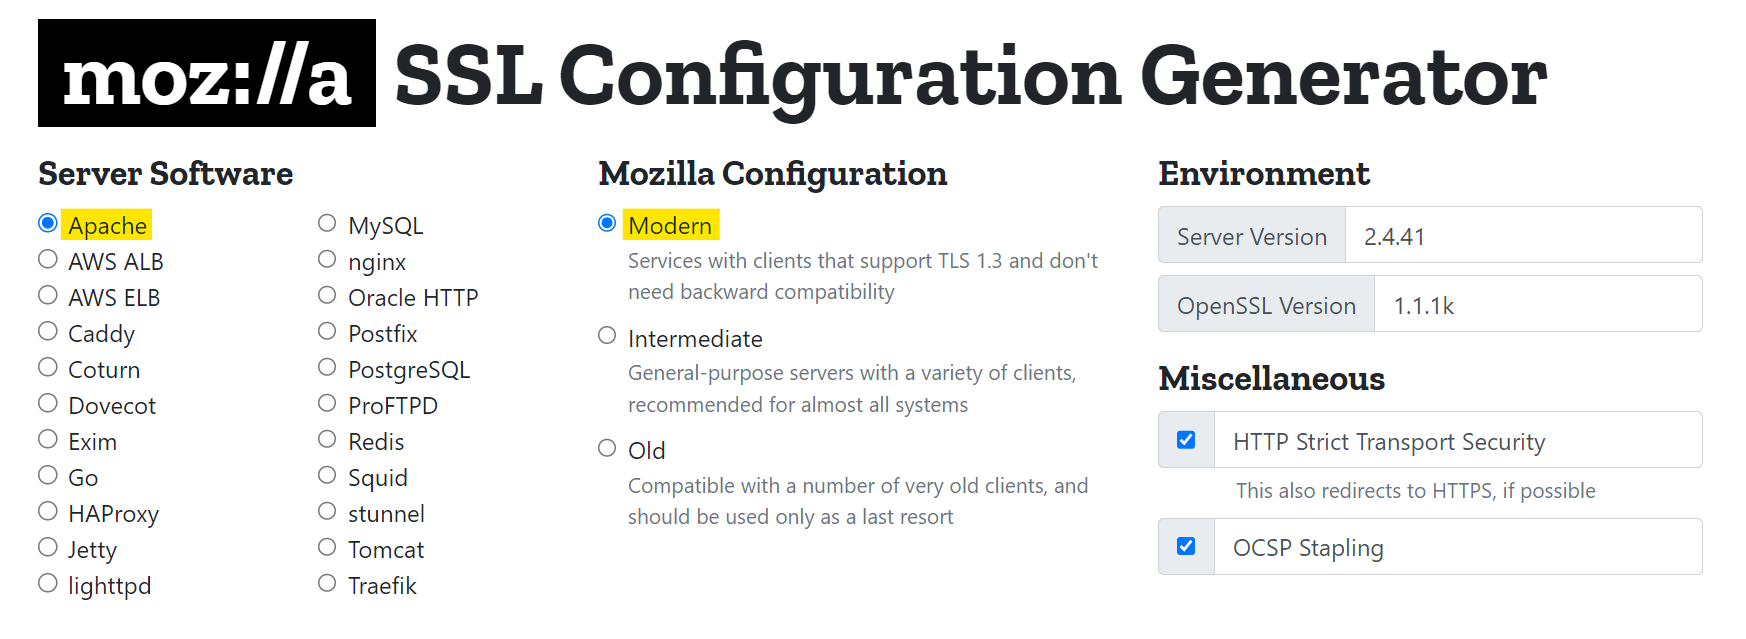 Mozilla Website Configuration